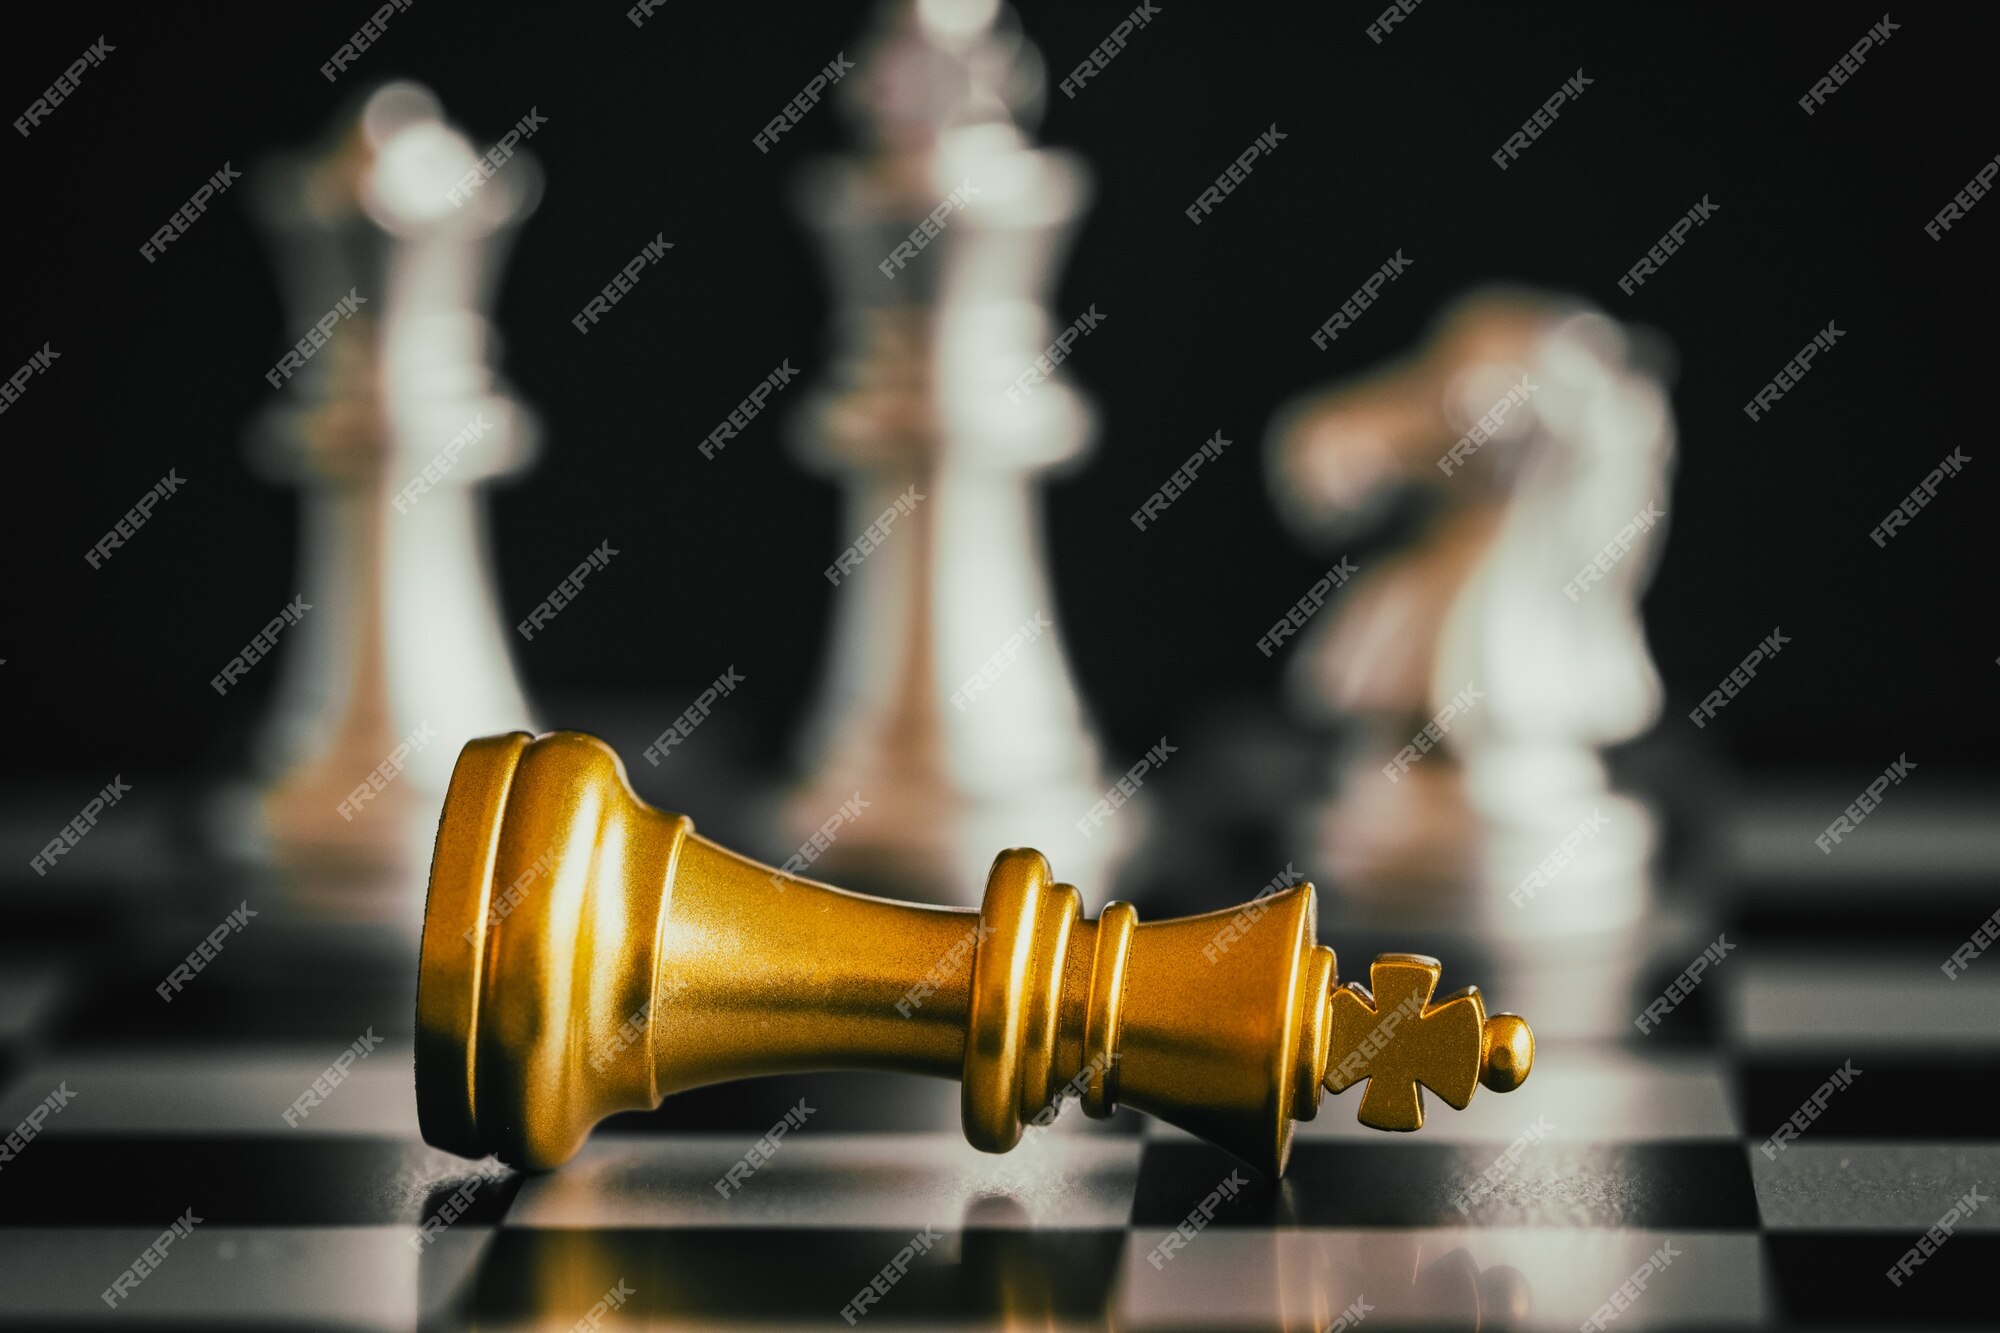 Jogo do desafio da inteligência da batalha da xadrez da estratégia no  tabuleiro de xadrez., Foto Premium